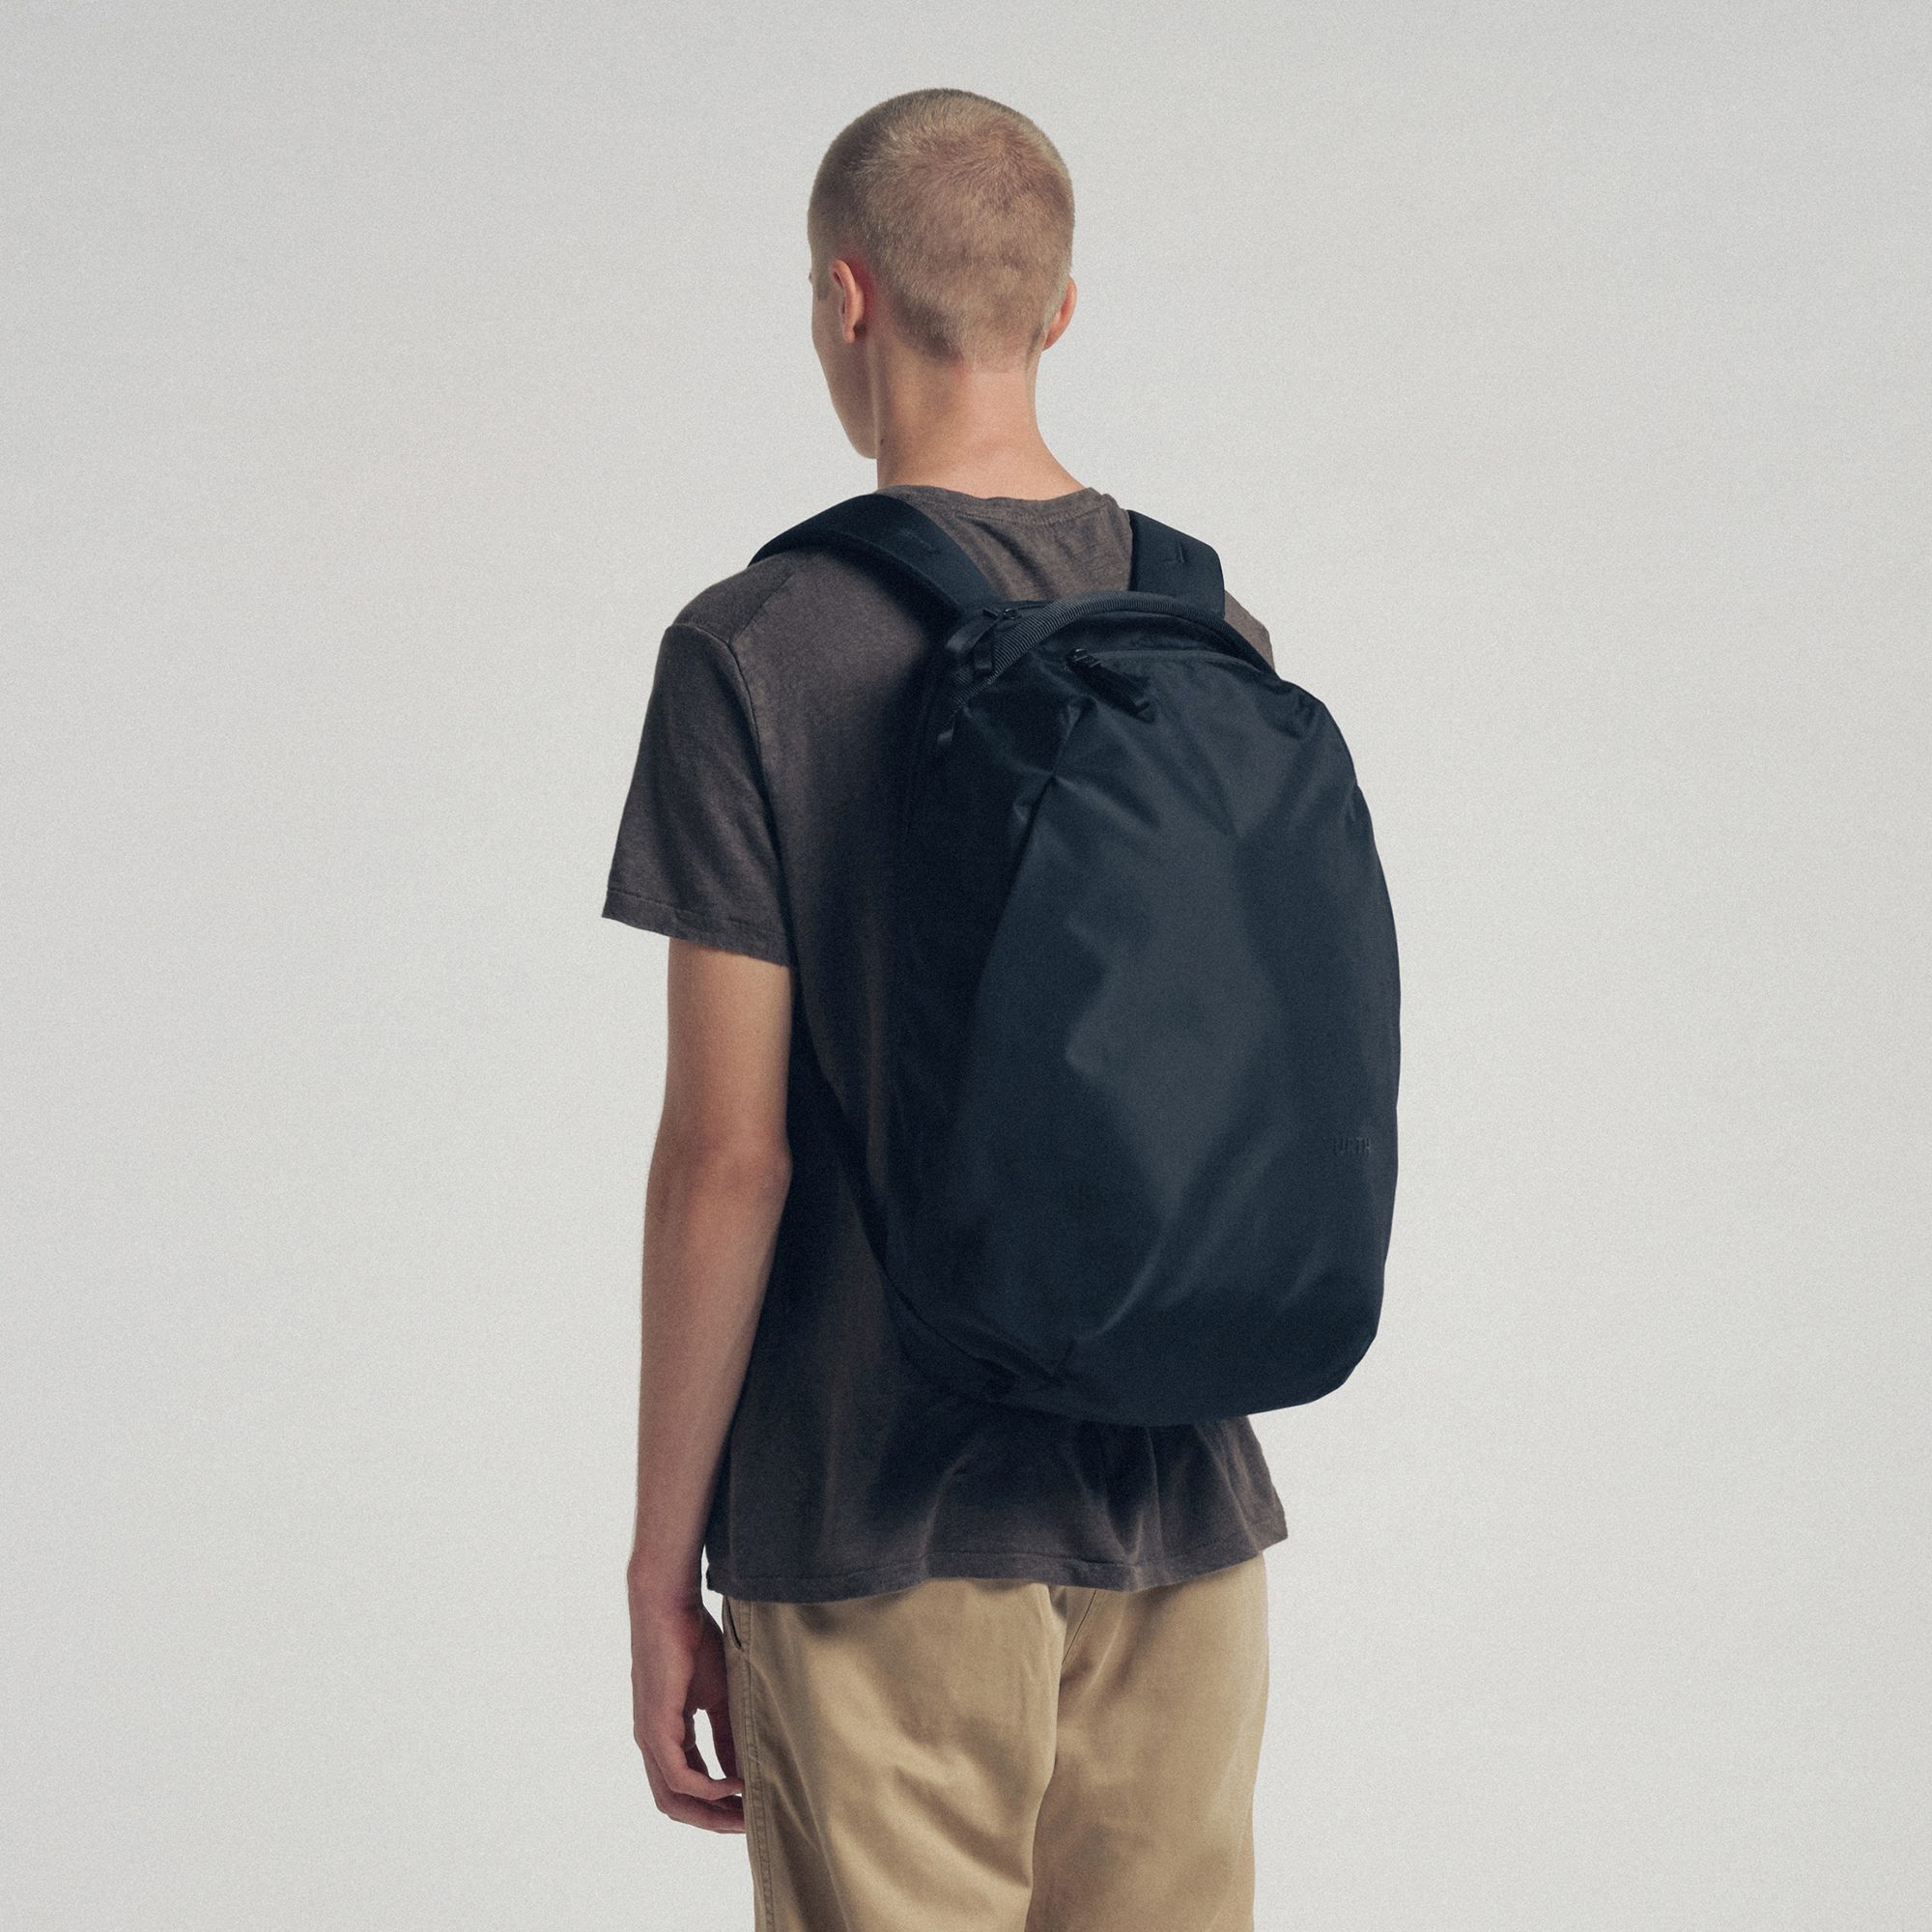 Urth Norite 24L Backpack (Black)